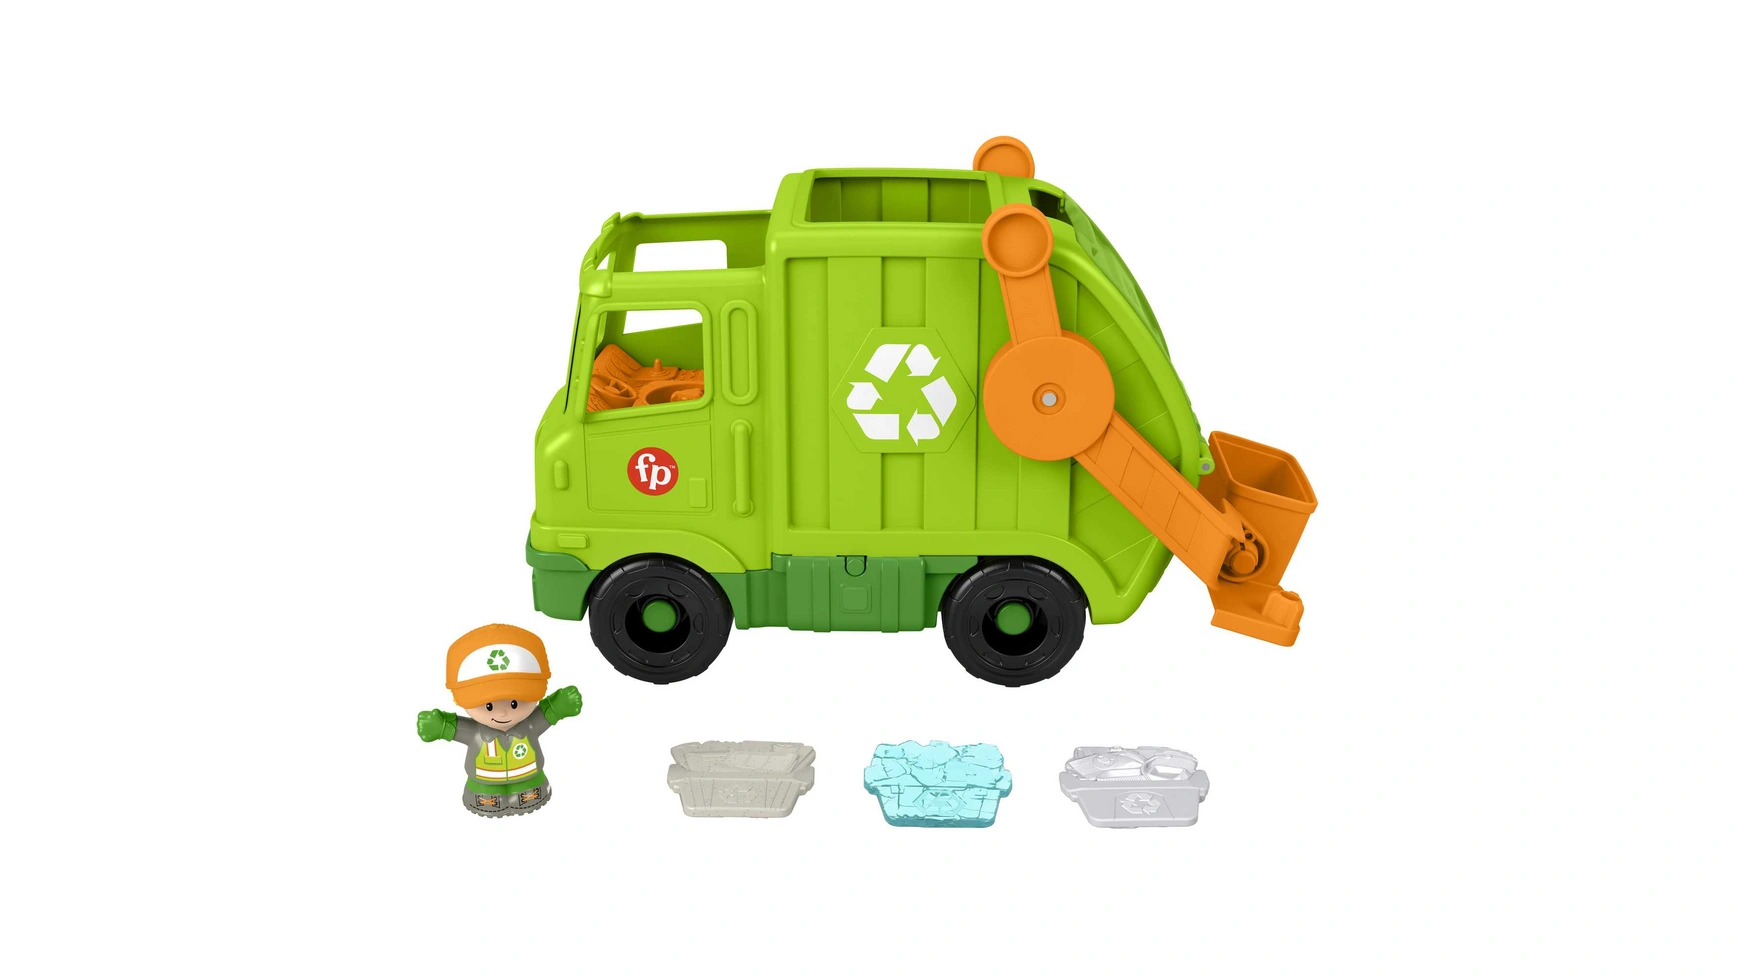 Игрушечная машина для мусора Fisher Price Little People с фигурками, обучающая игрушка